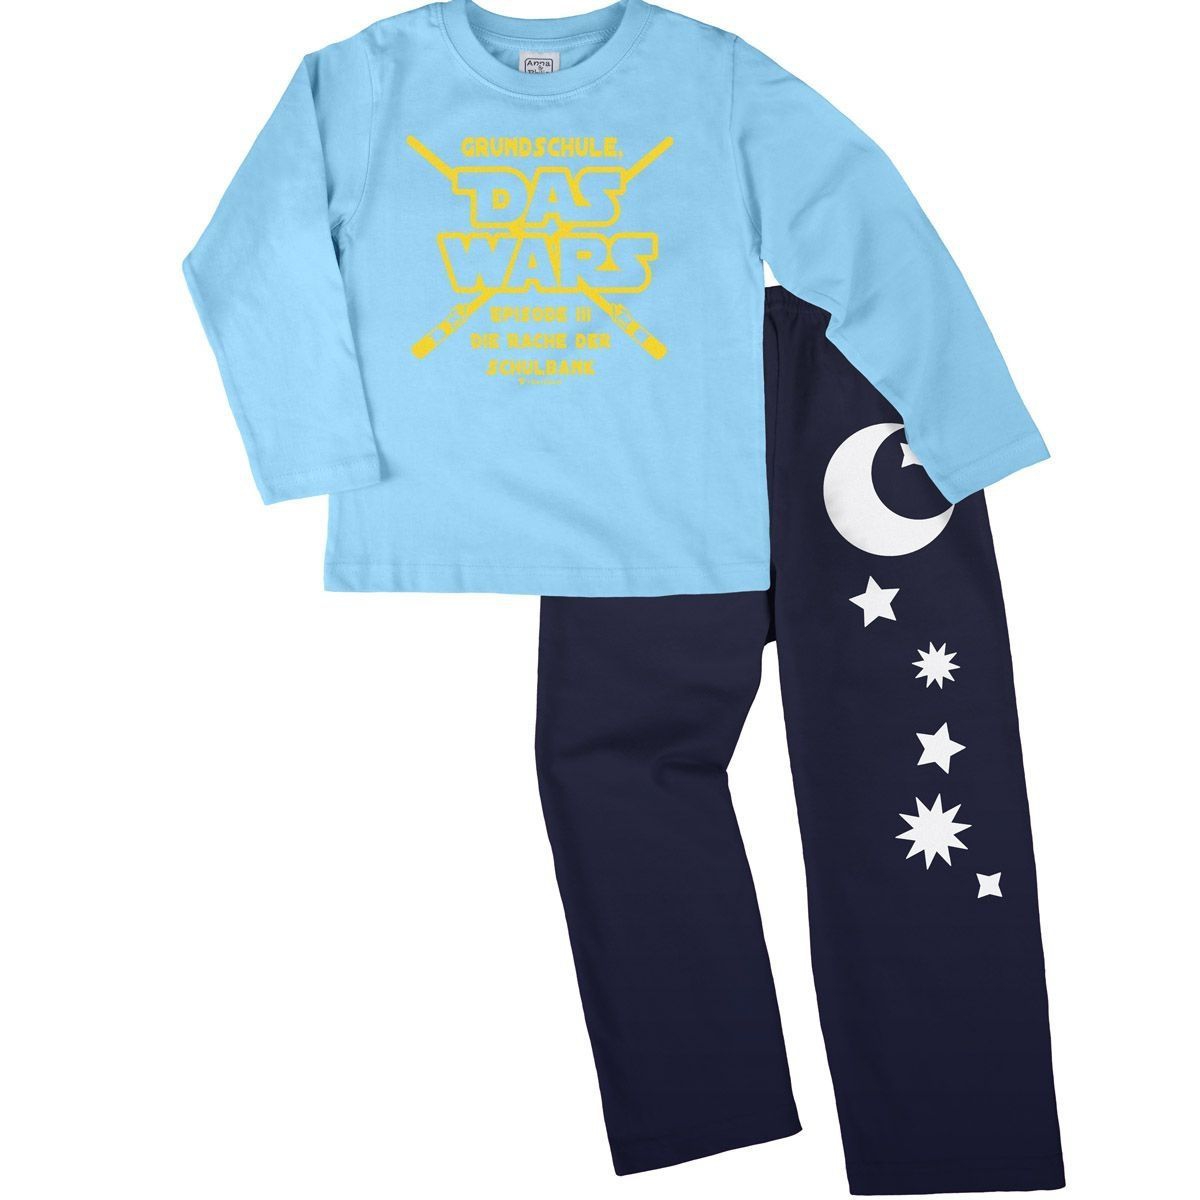 Das wars Grundschule Pyjama Set hellblau / navy 134 / 140